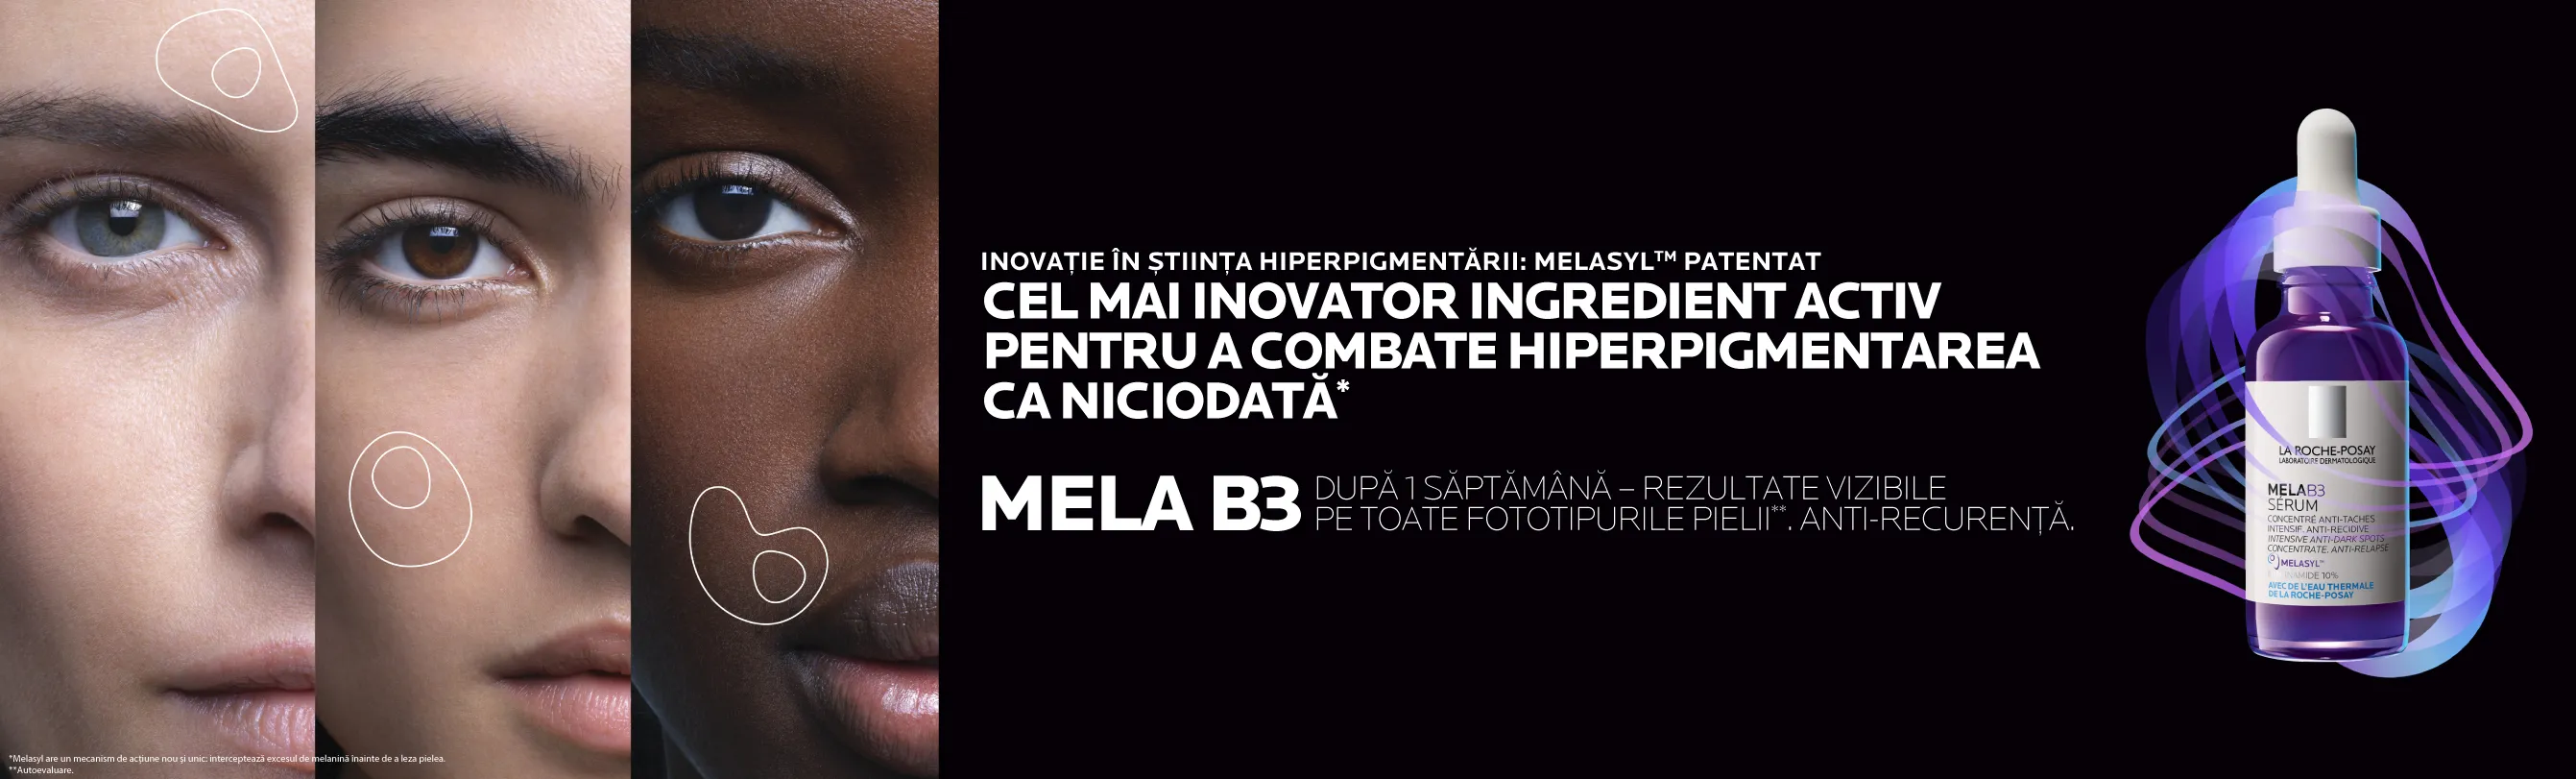 Inovatie in stiinta hiperpigmentarii - Melasyl Patentat